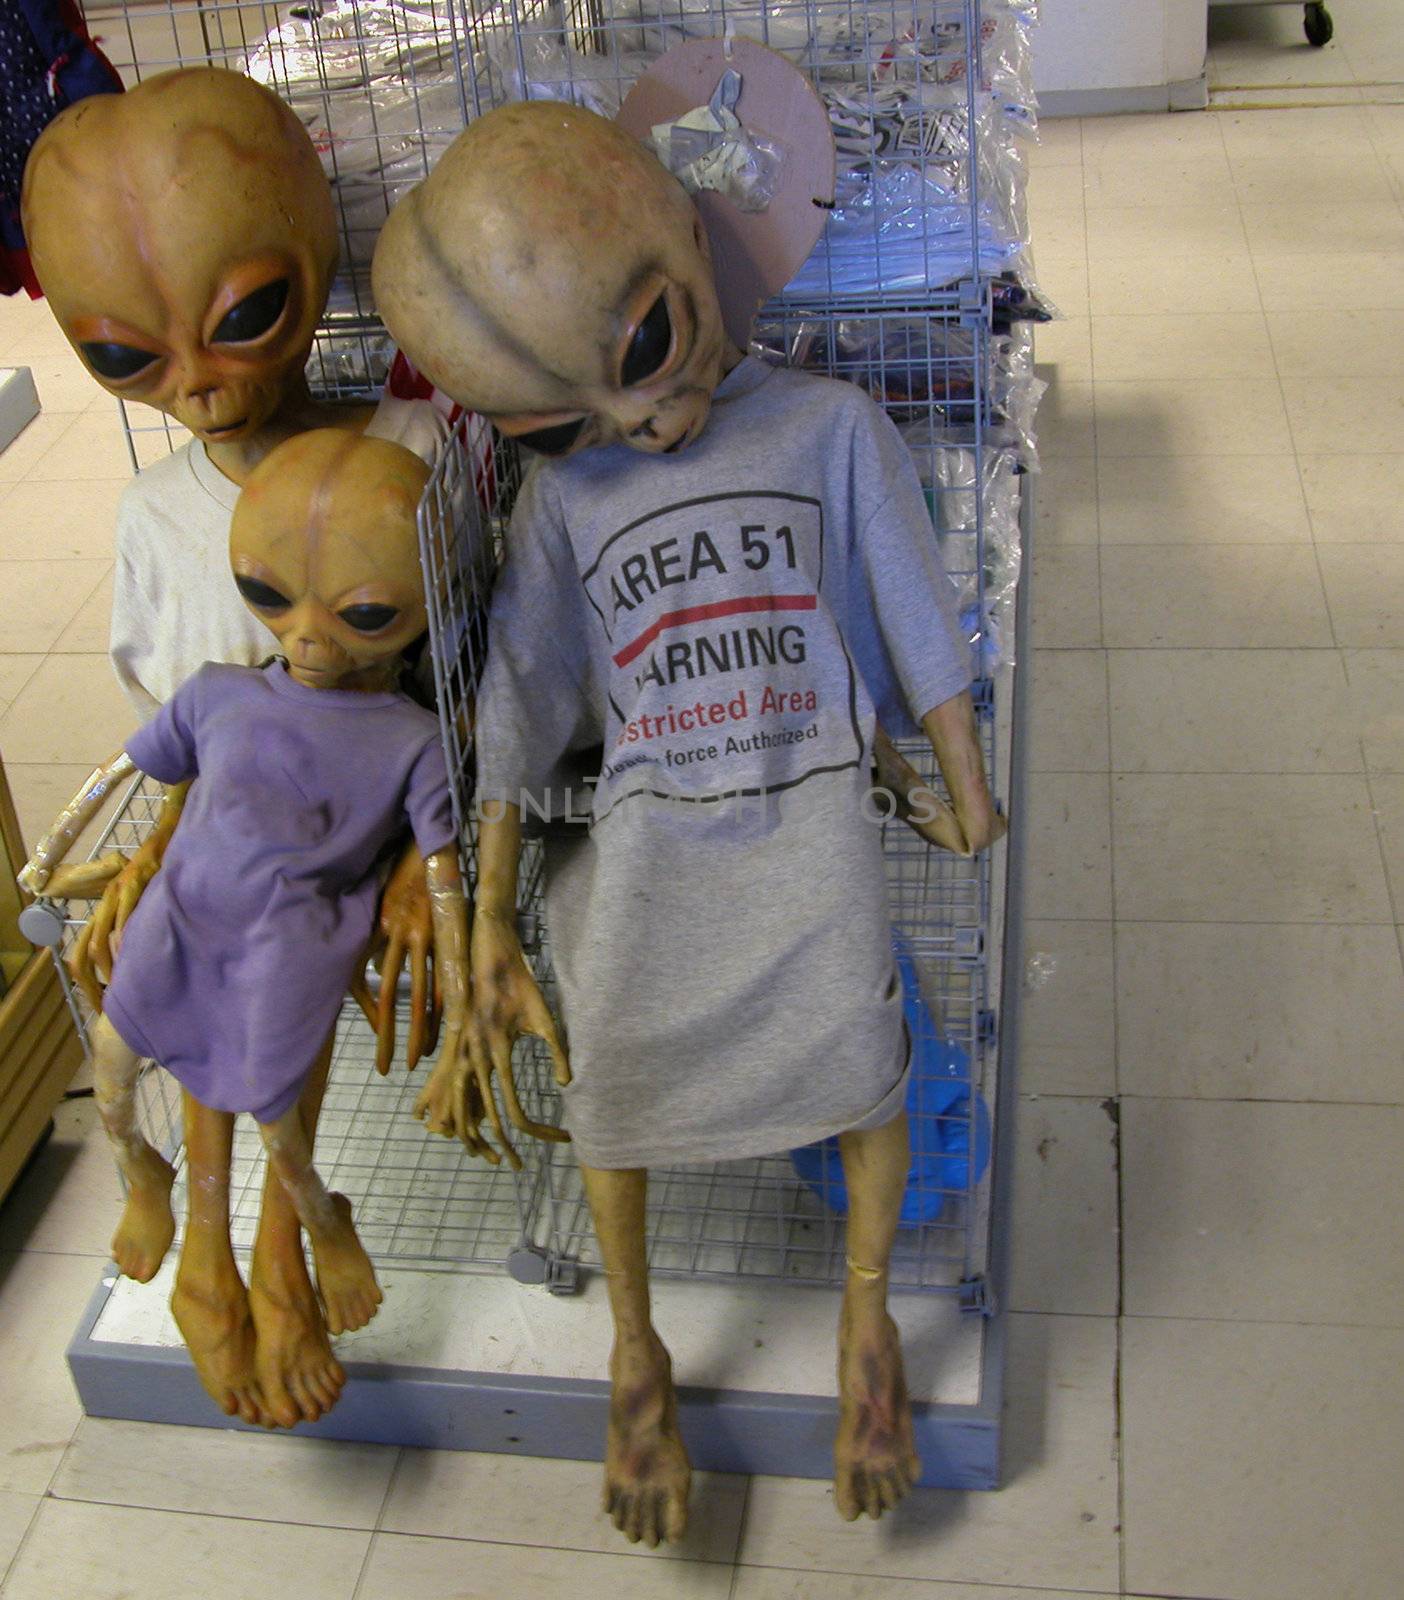 Alien Puppets in Rachel, Nevada by jovannig